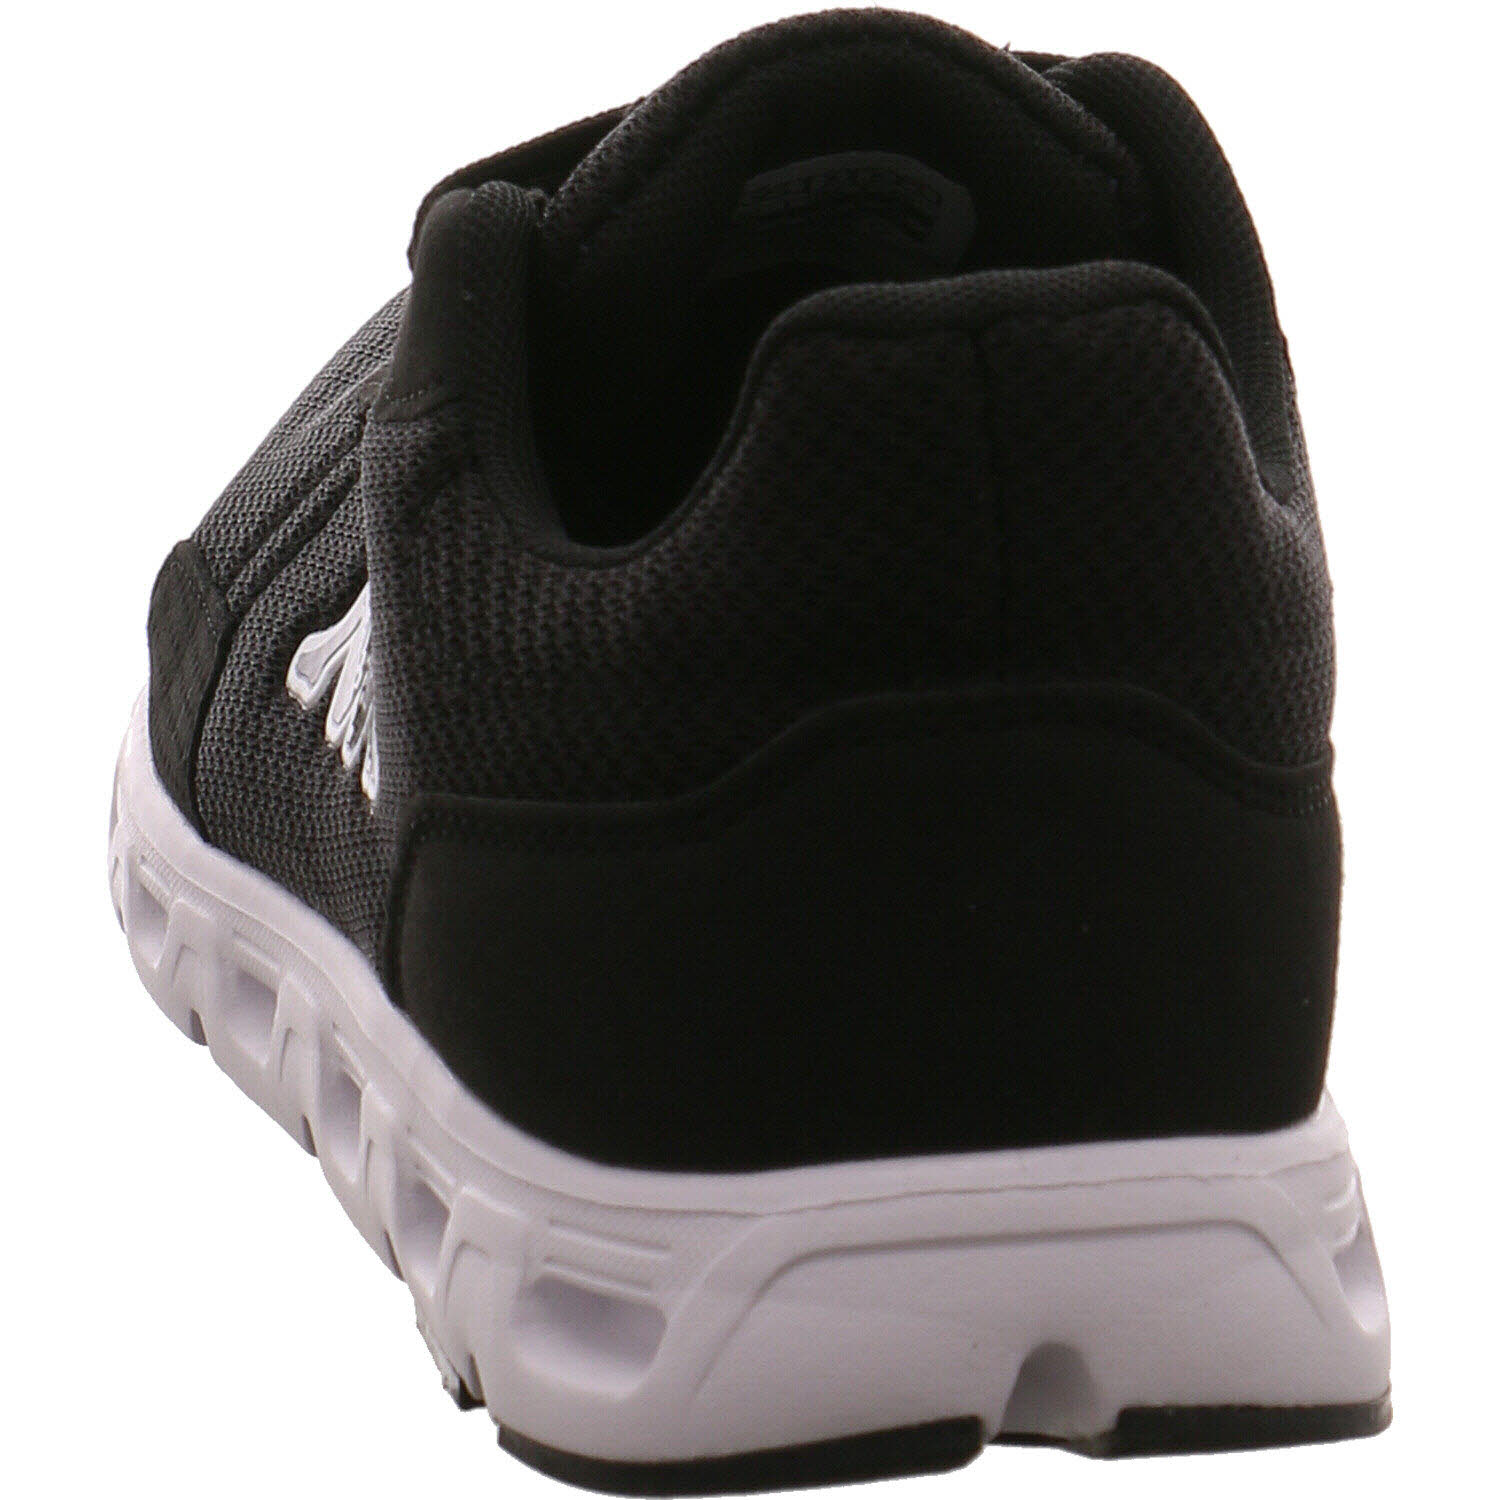 Stylecode: Shoes Kappa 243102 low P&P schwarz/weiß Getup Sneaker in |